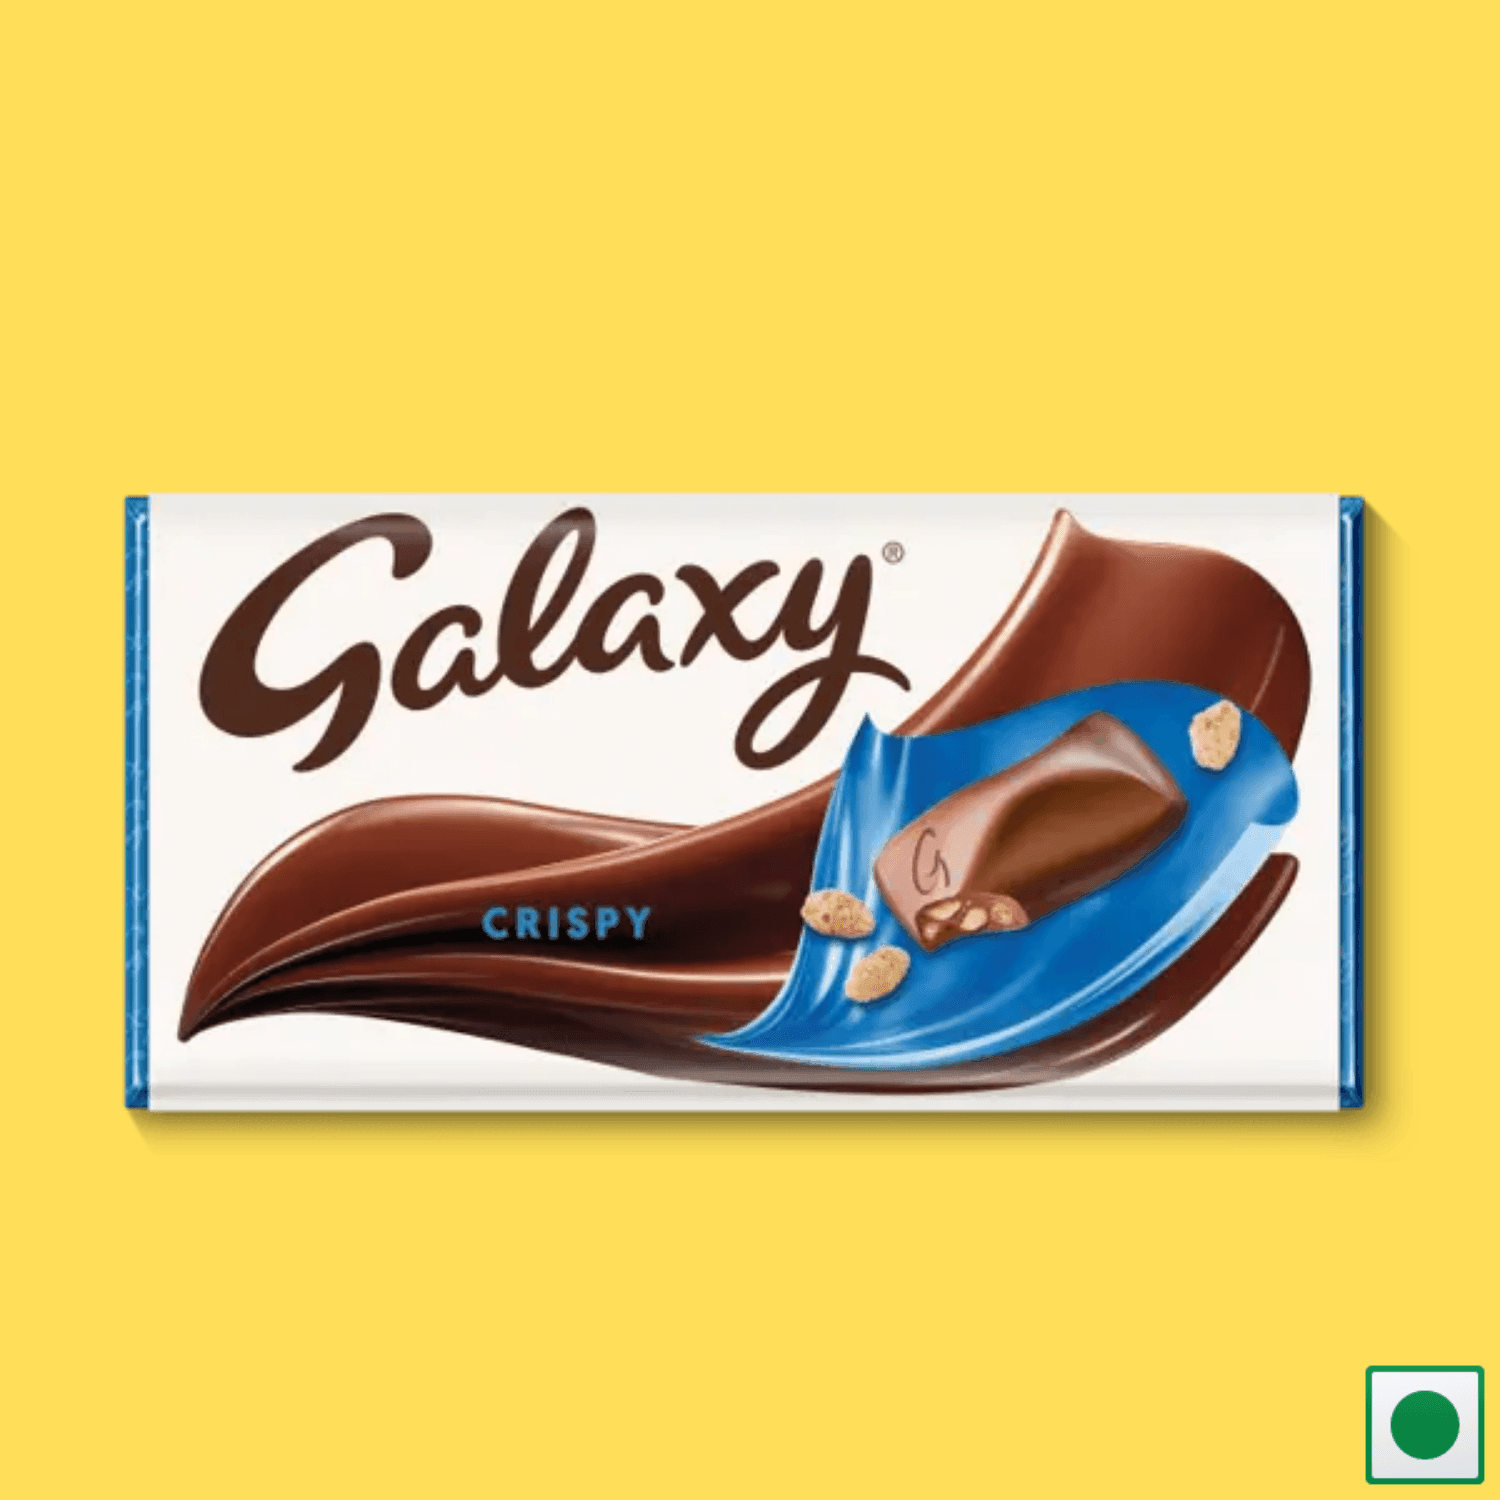 Galaxy® Crispy Chocolate Block, 102g (Imported) - Super 7 Mart